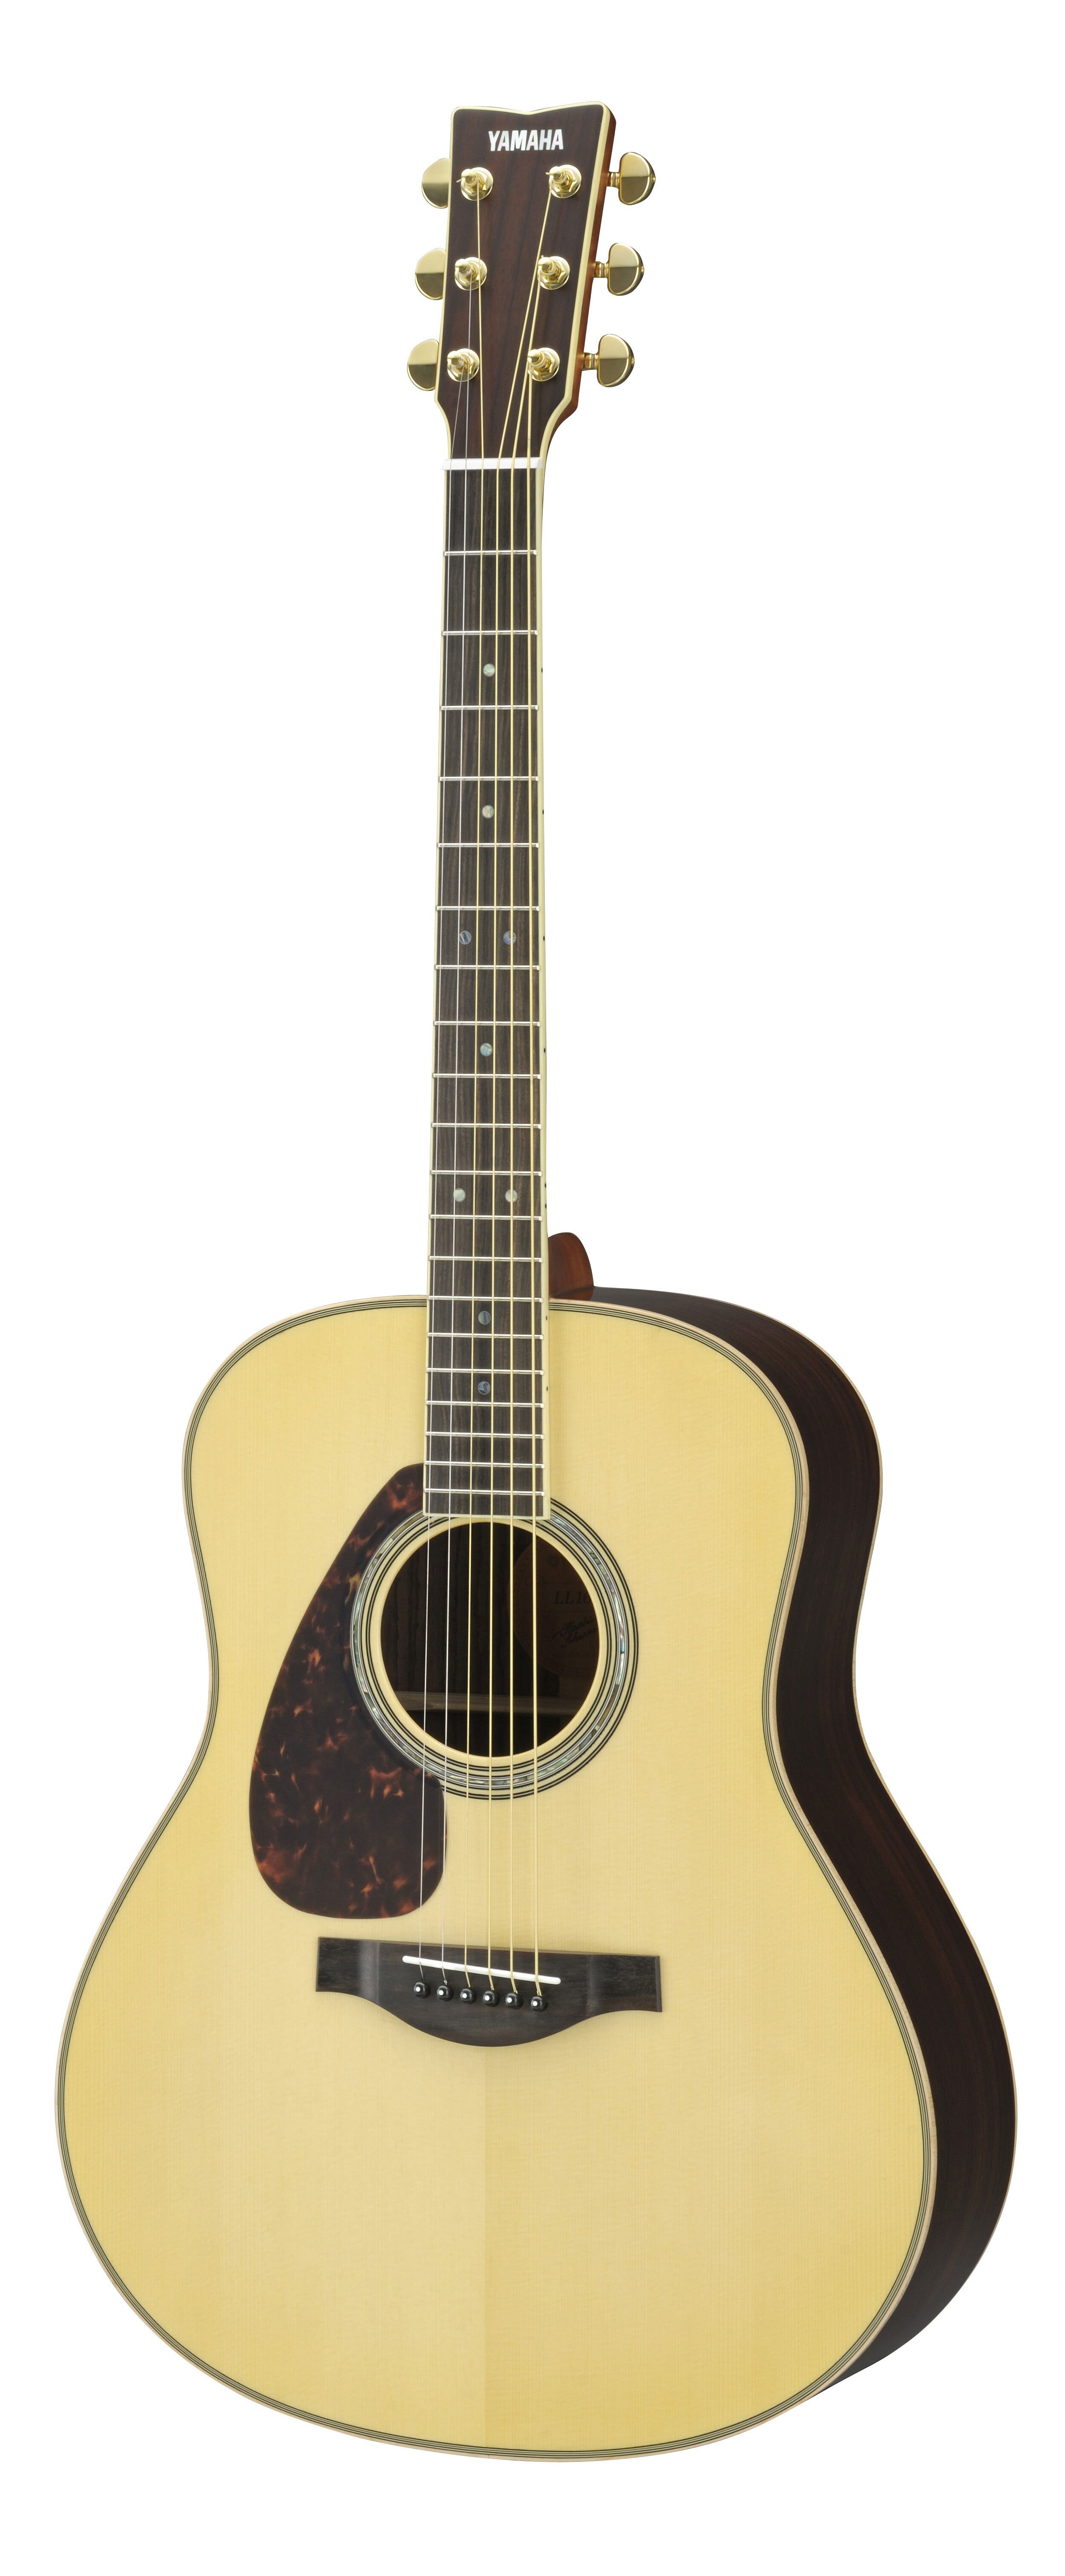 L Series - LL Series - Acoustic Guitars - Guitars, Basses & Amps